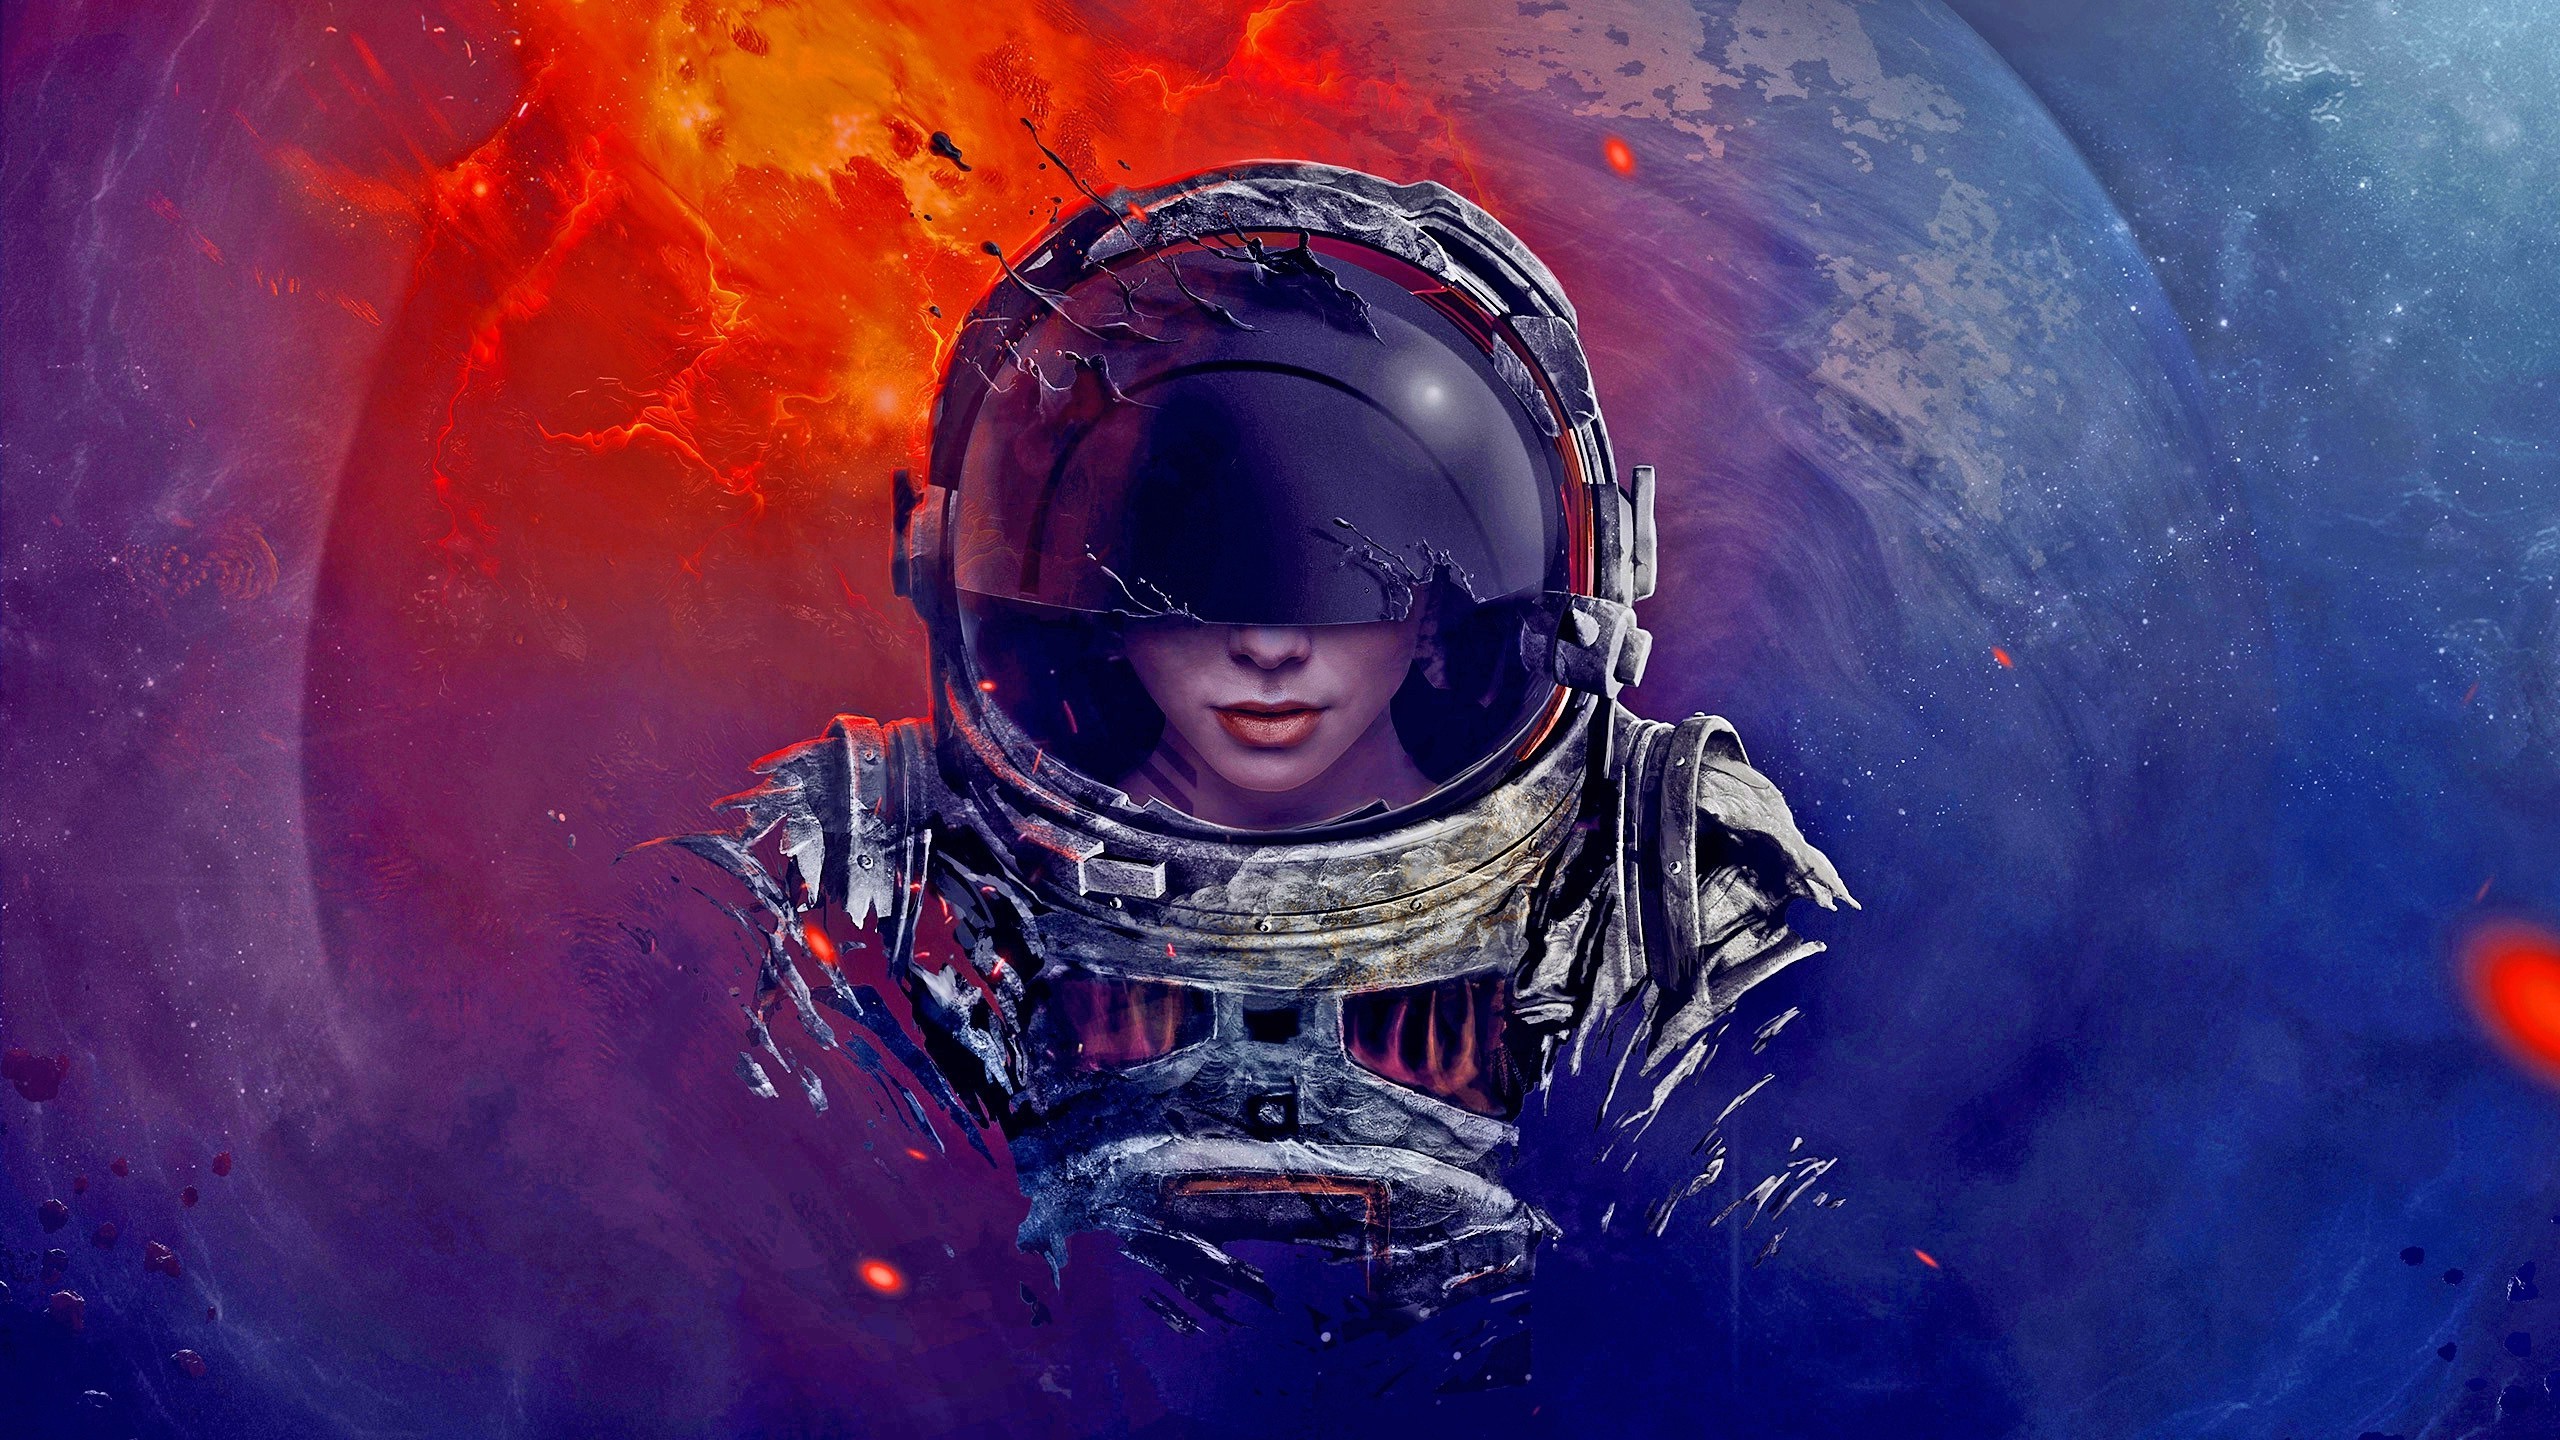 digital Art, Astronaut, Spacesuit, Helmet, Universe, Space, Fire, Women, Rock, Planet, Melting, Galaxy, Nebula, Artwork Wallpaper